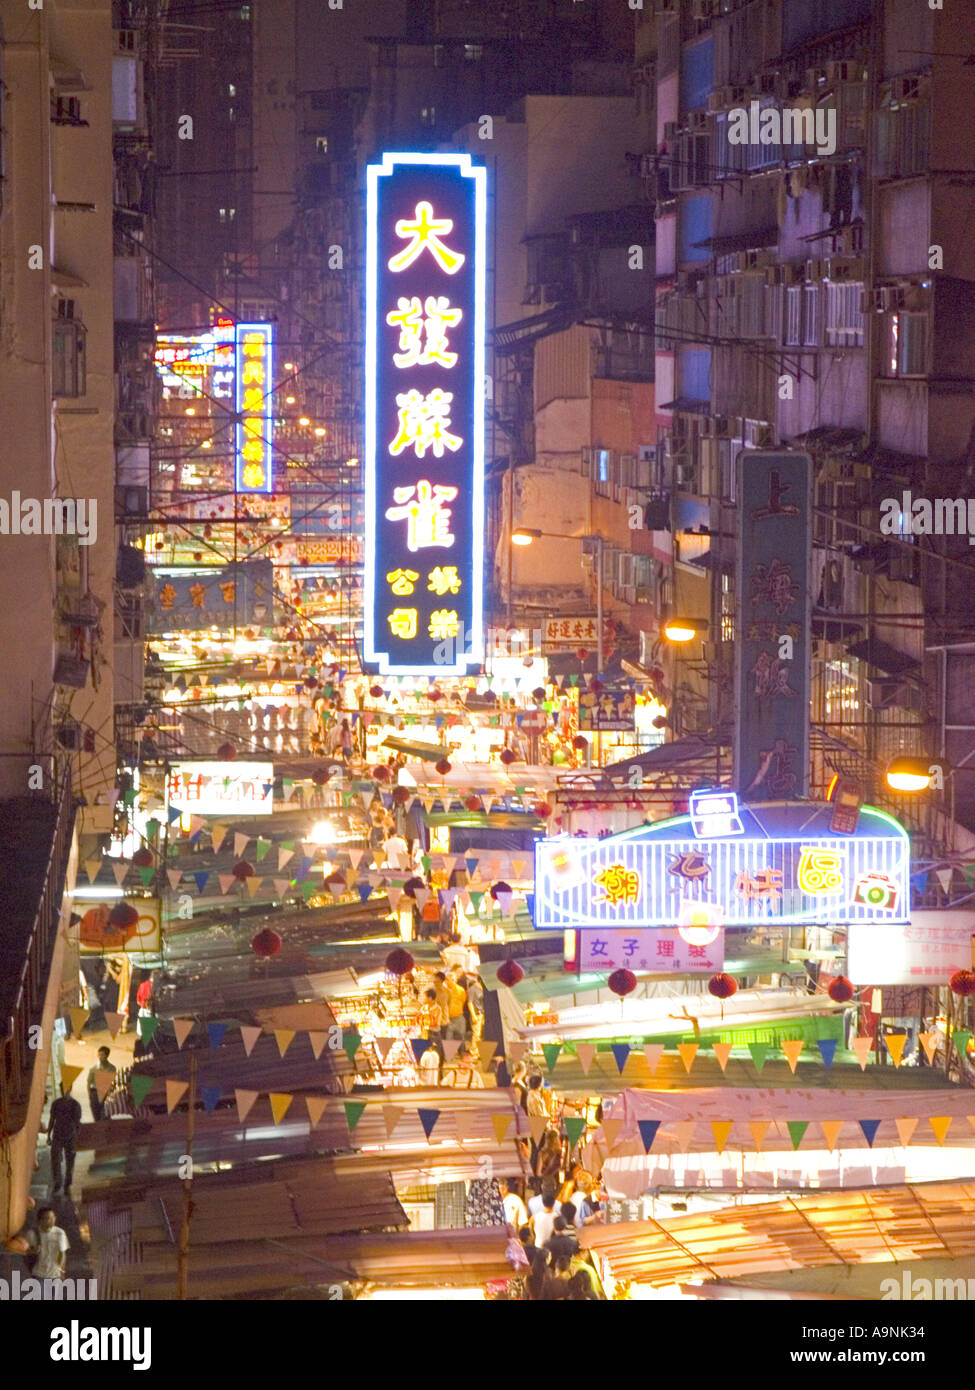 China Hong Kong Yau Ma Tei Temple street open-air night market Stock Photo